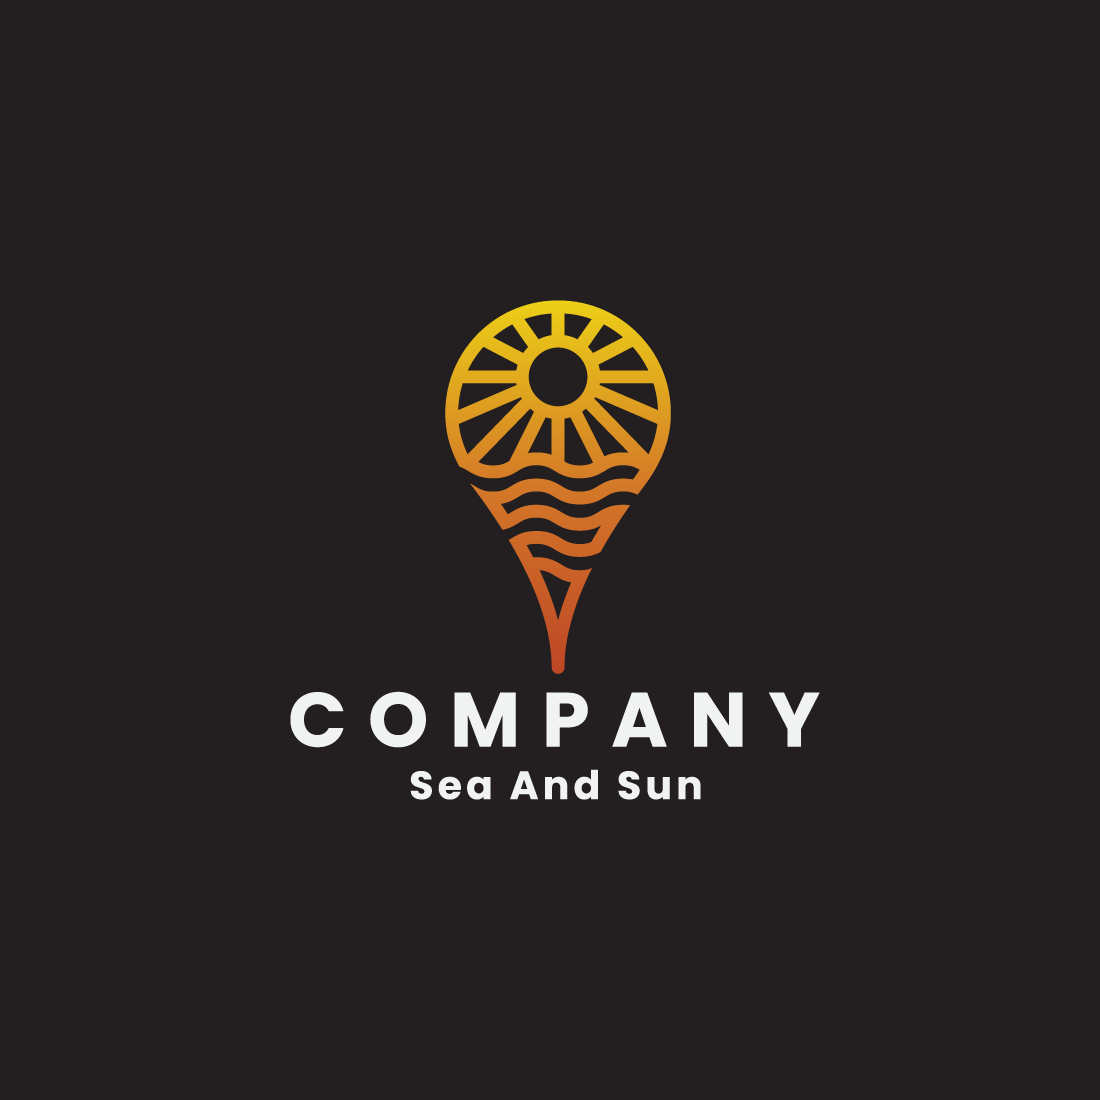 Travel Location - Sea and Sun Branding Logo cover image.